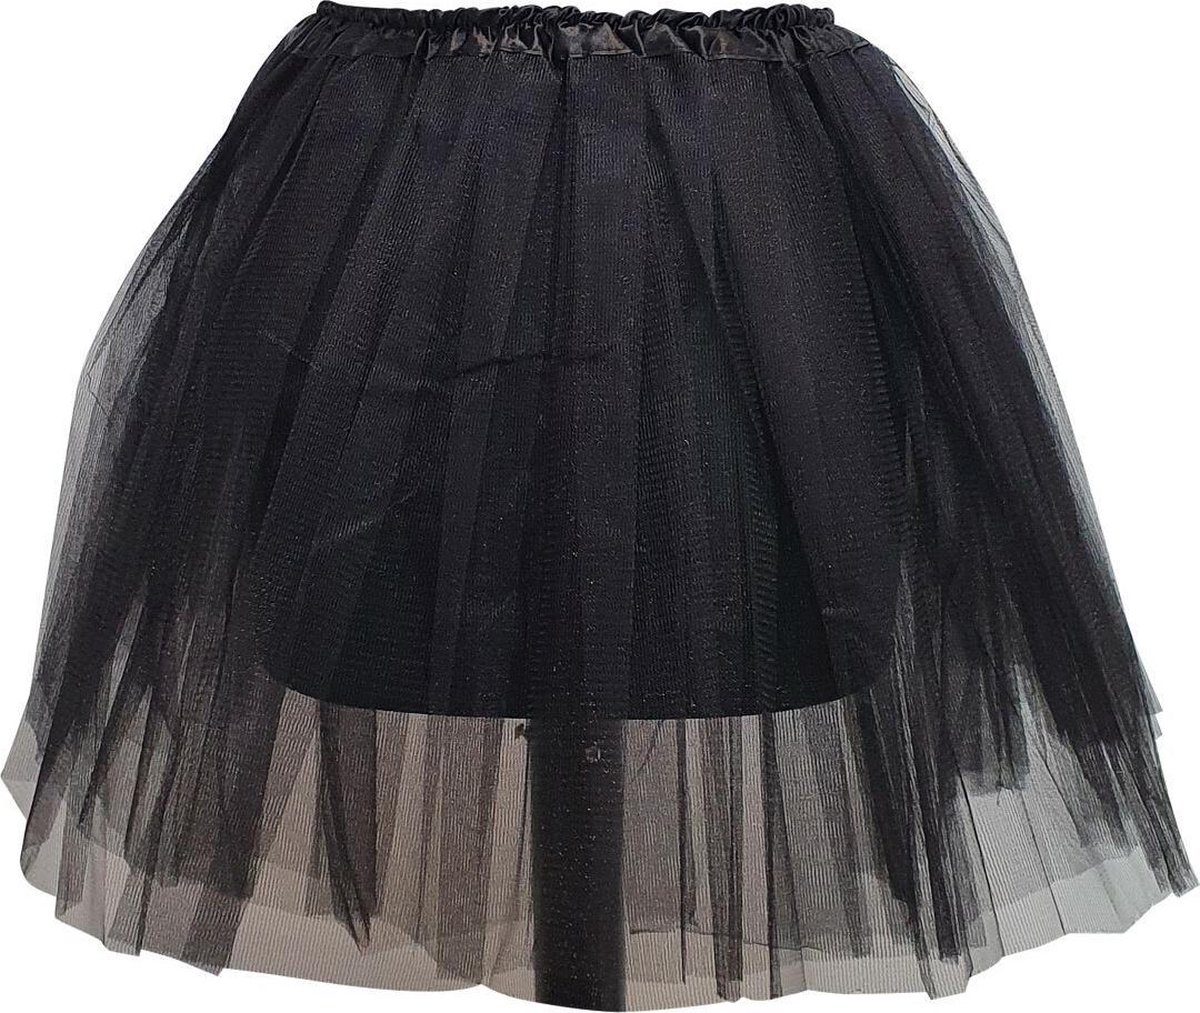 Tutu – dames – petticoat – 40 cm - tule rokje – zwart  - 3 lagen - musical - verjaardag - sinterklaas – kerstmis – carnaval – ballet - ballerina